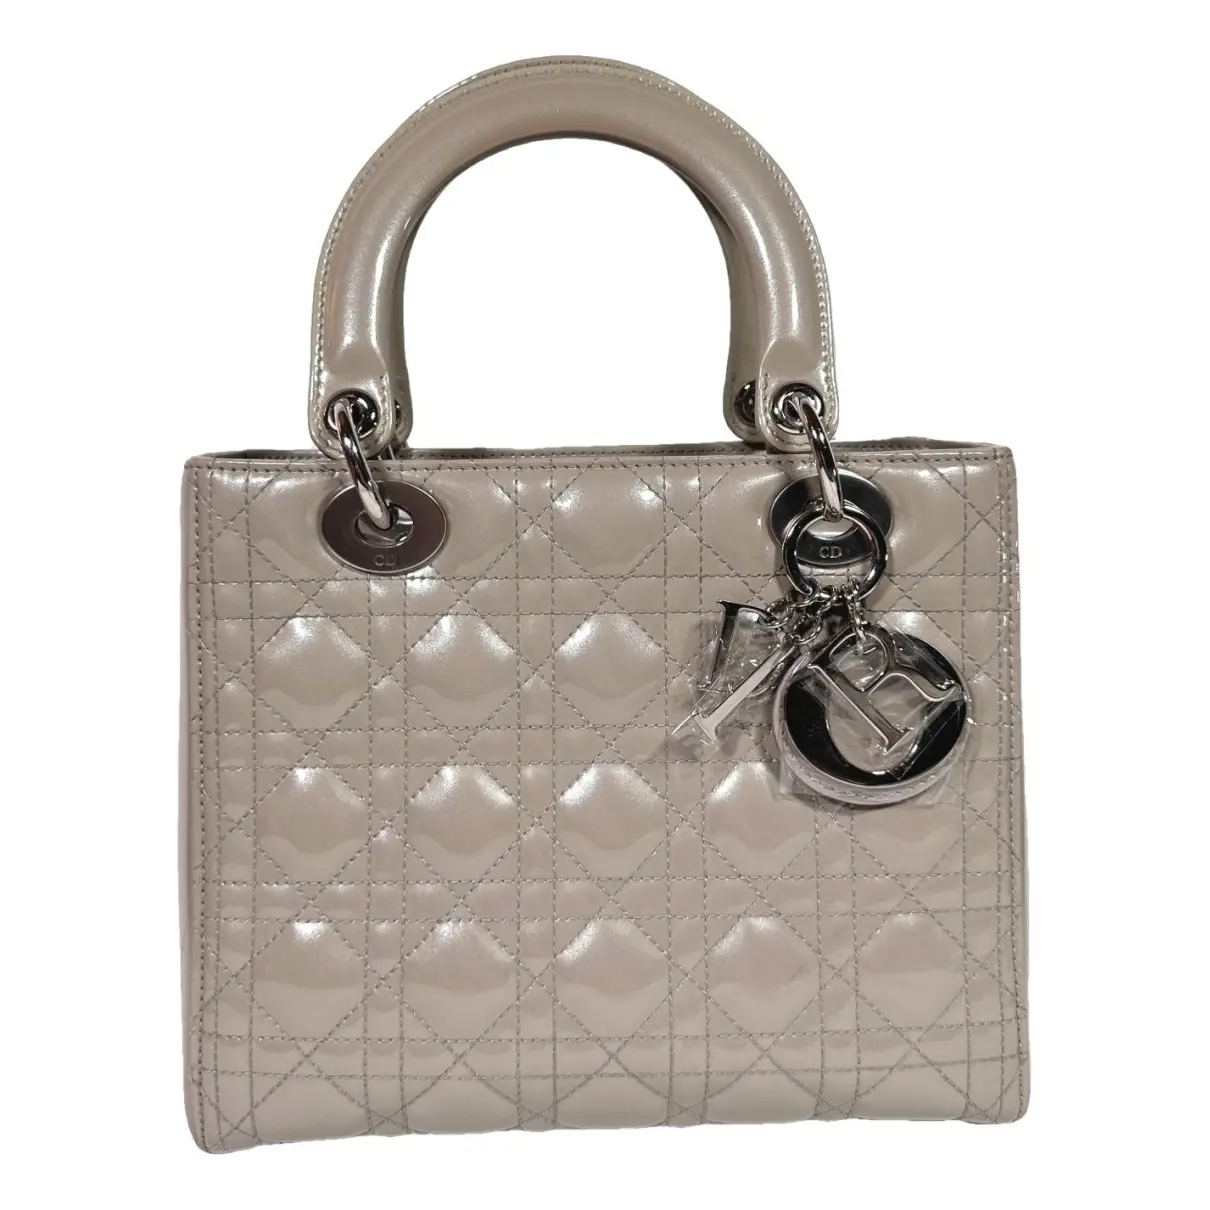 Dior Lady Medium Bags & Handbags for Women, Authenticity Guaranteed